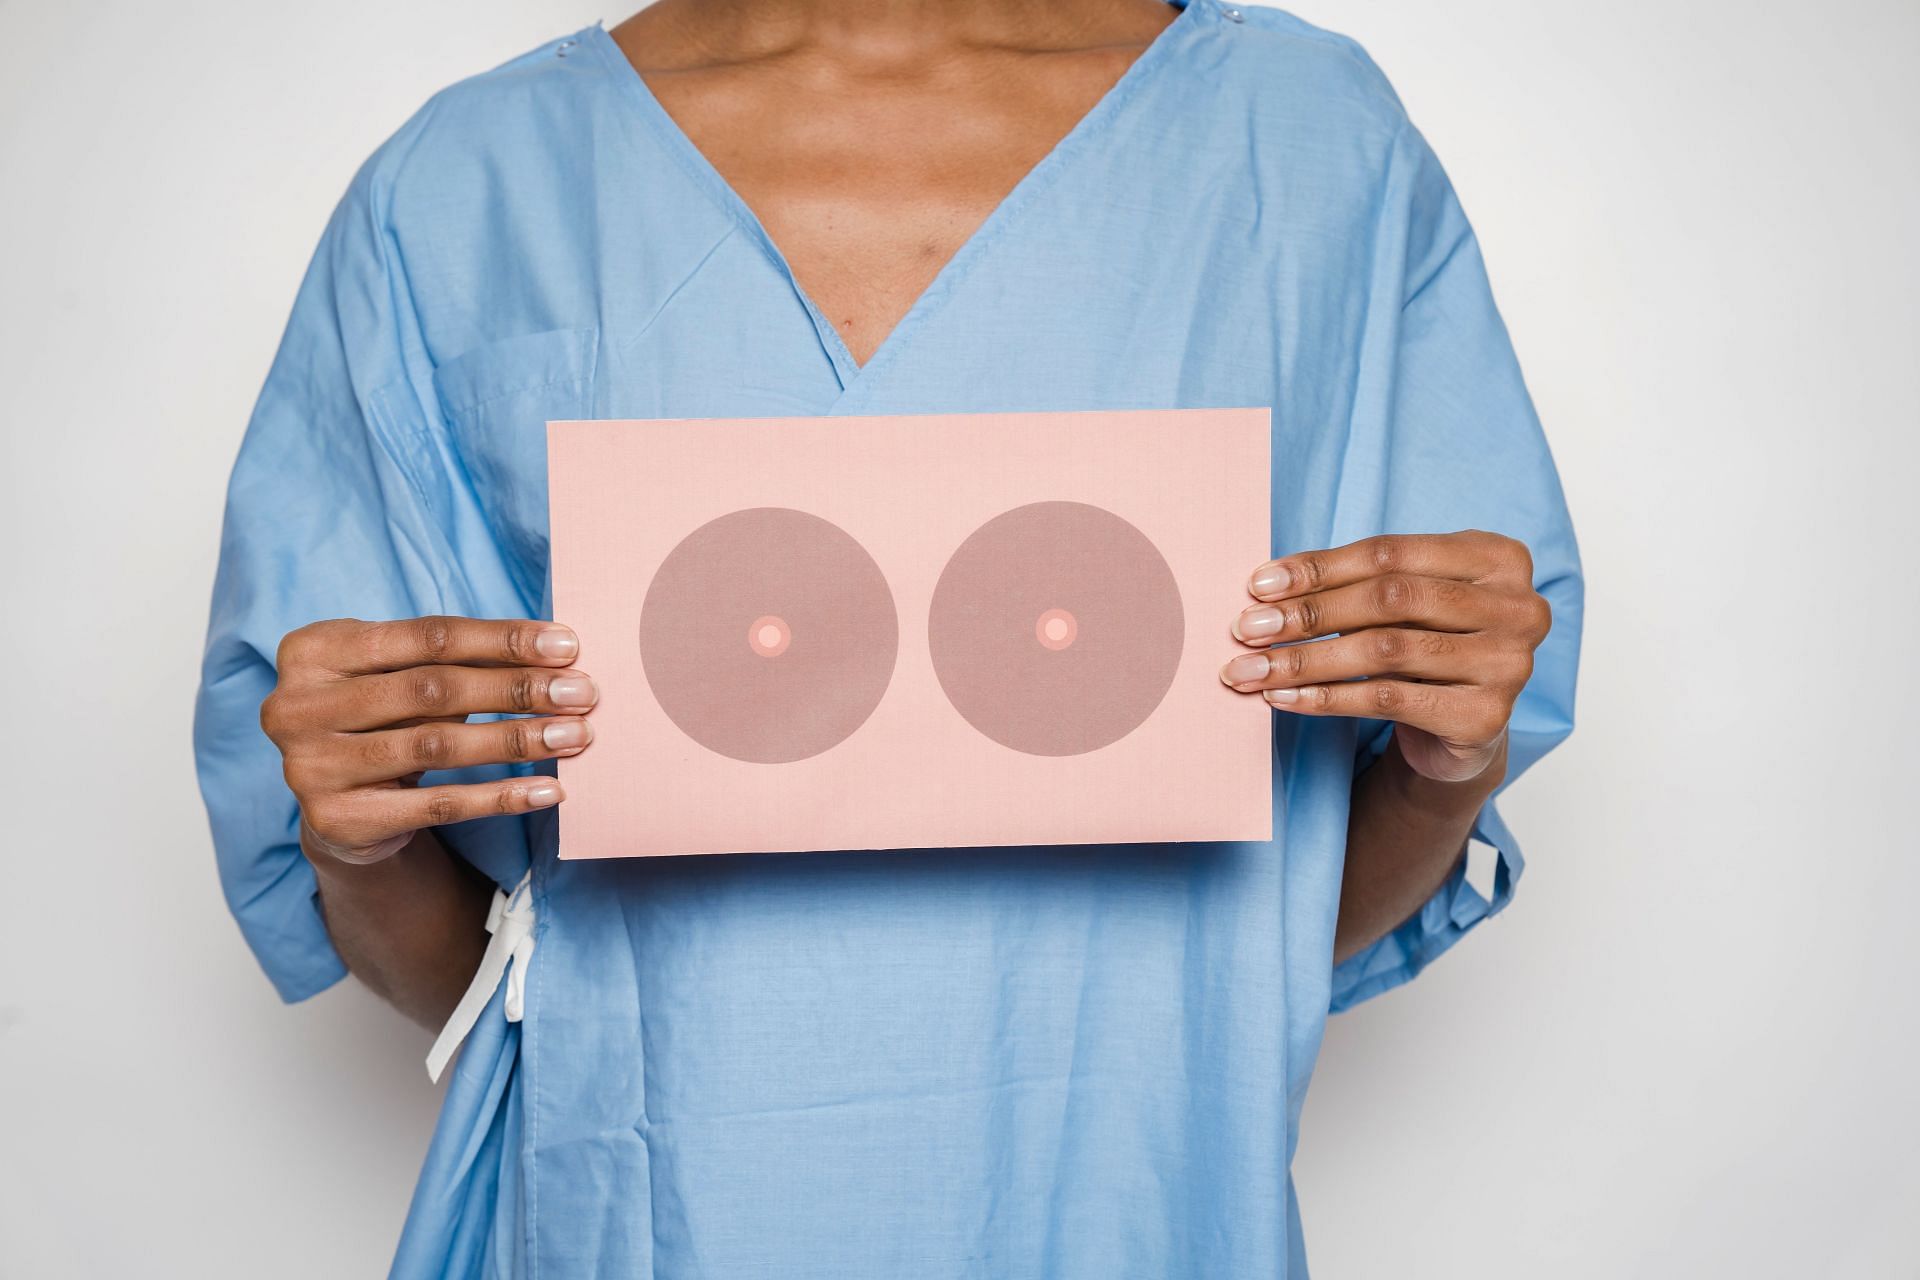 Symptoms of breast cancer in men are similar to that in women. (Image via Pexels/ Klaus Nielsen)